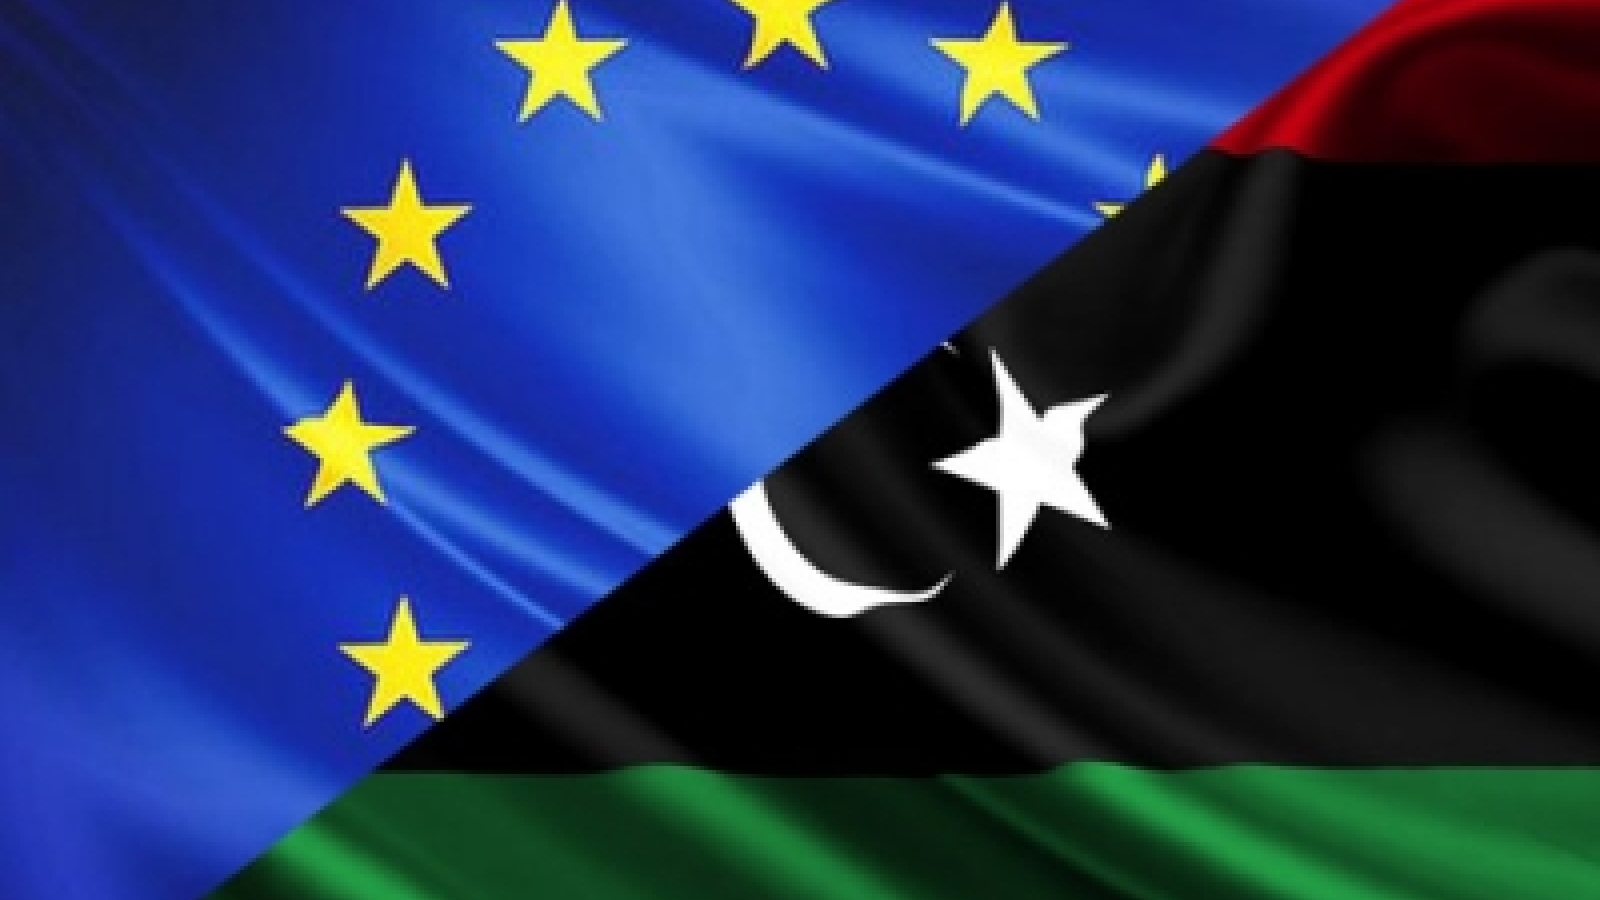 EU-Libya flags